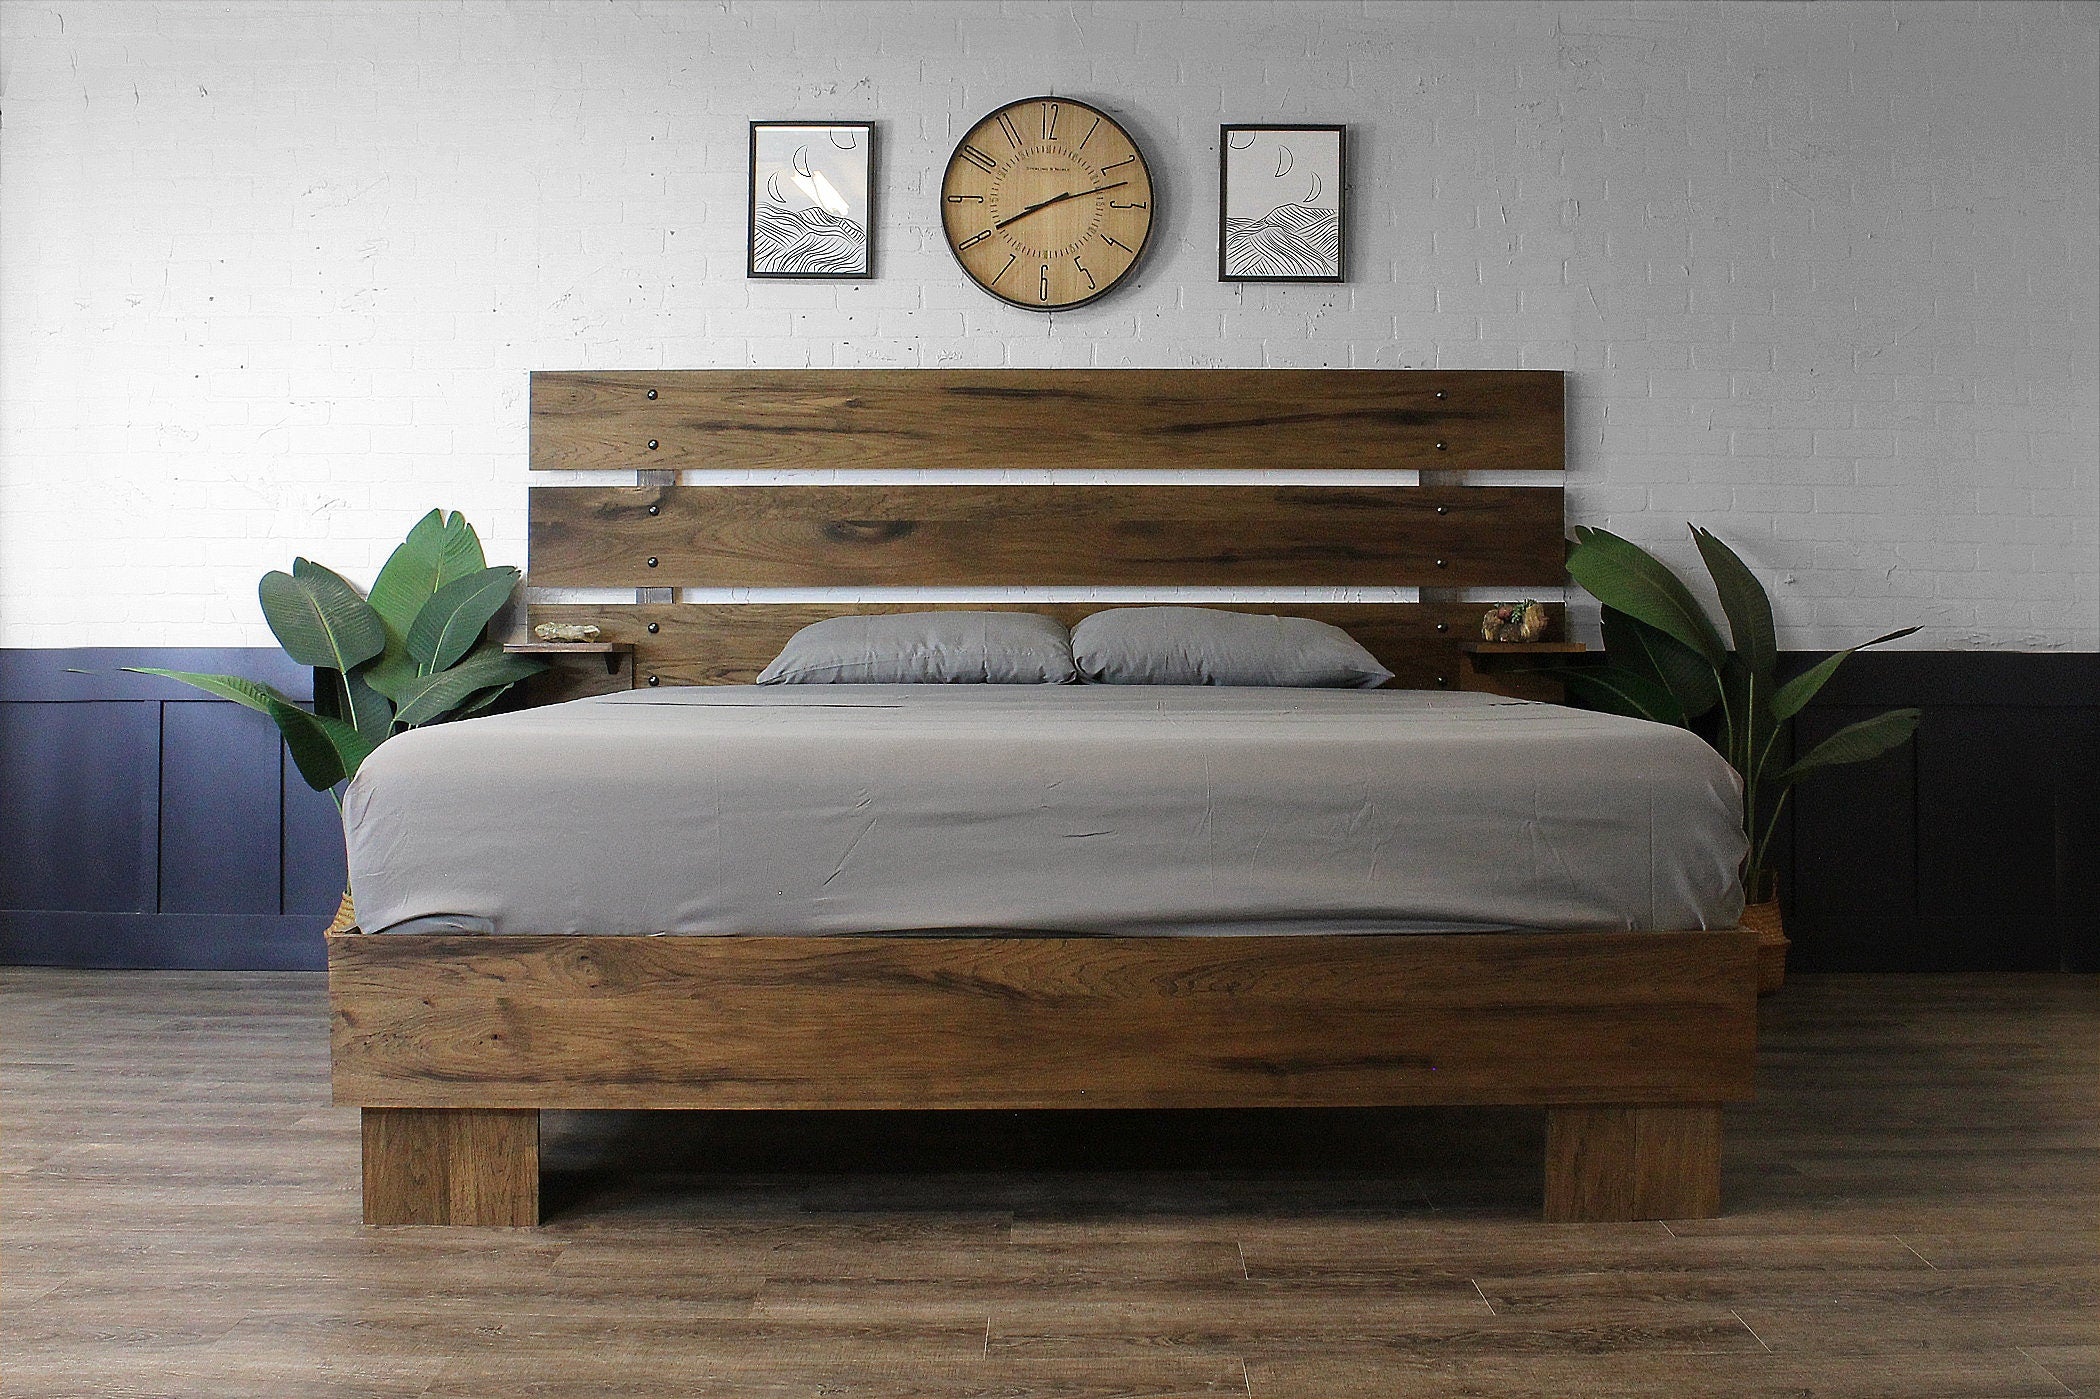 Timberline Bed Frame - Modern Rustic Style - Handmade